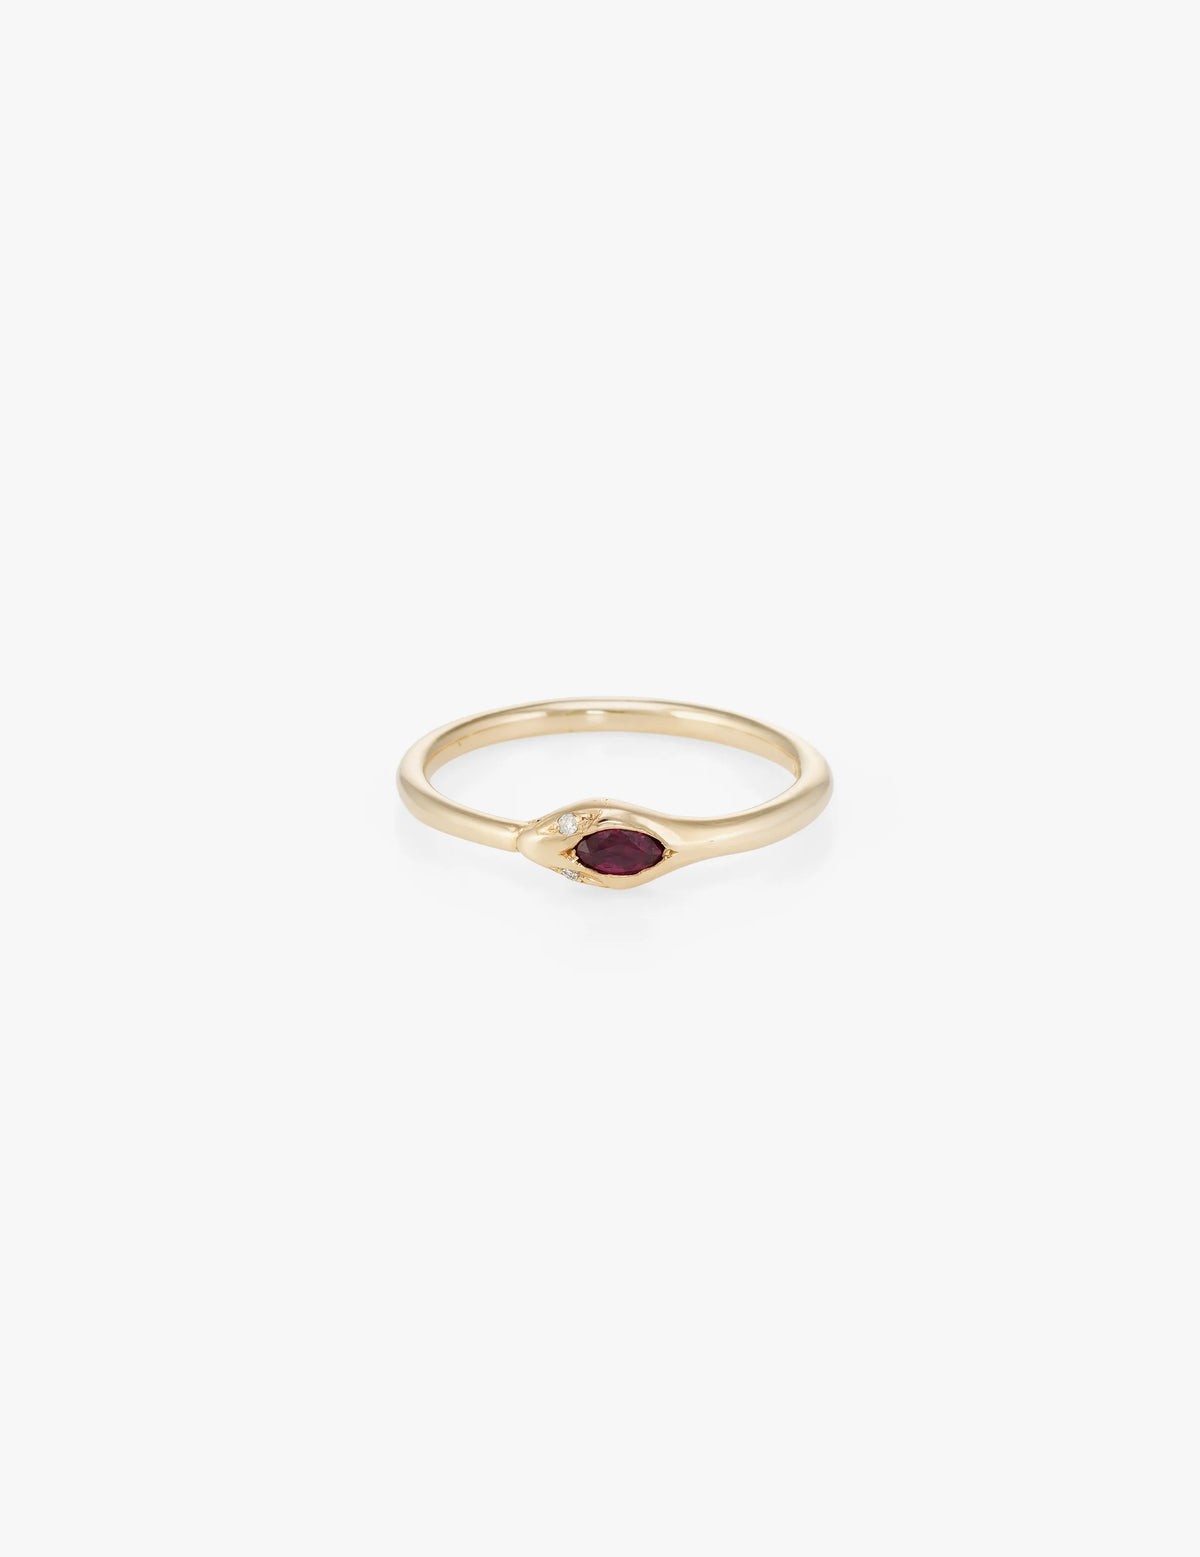 Ruby Ouroboros Ring